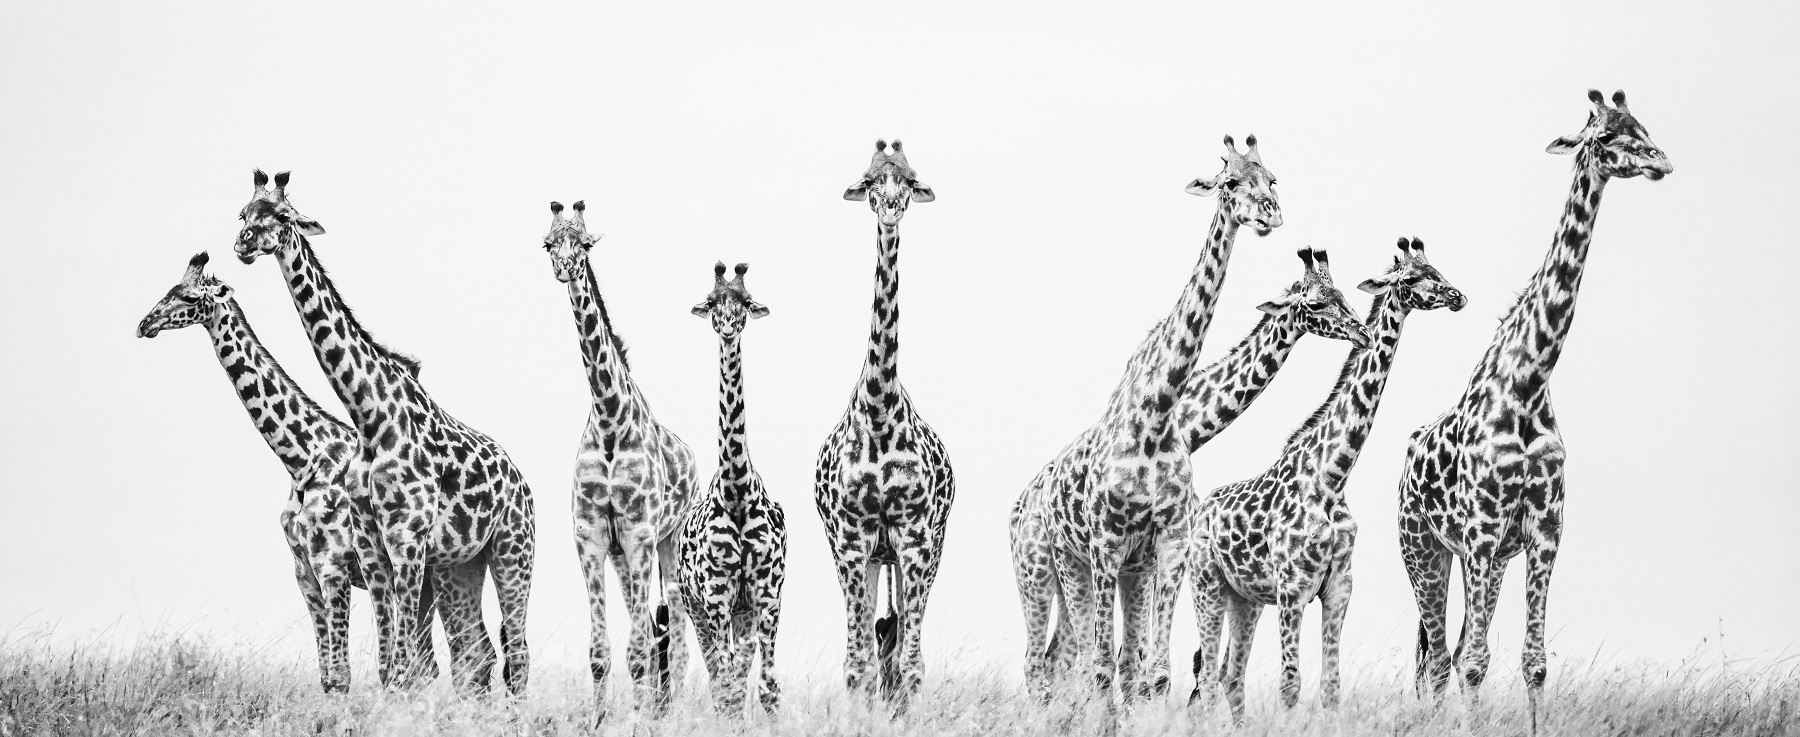 Black and White Photo Awards 2022 Fauna and flora golden mention - Ricardo Tormo Massignani - Posado de girafas